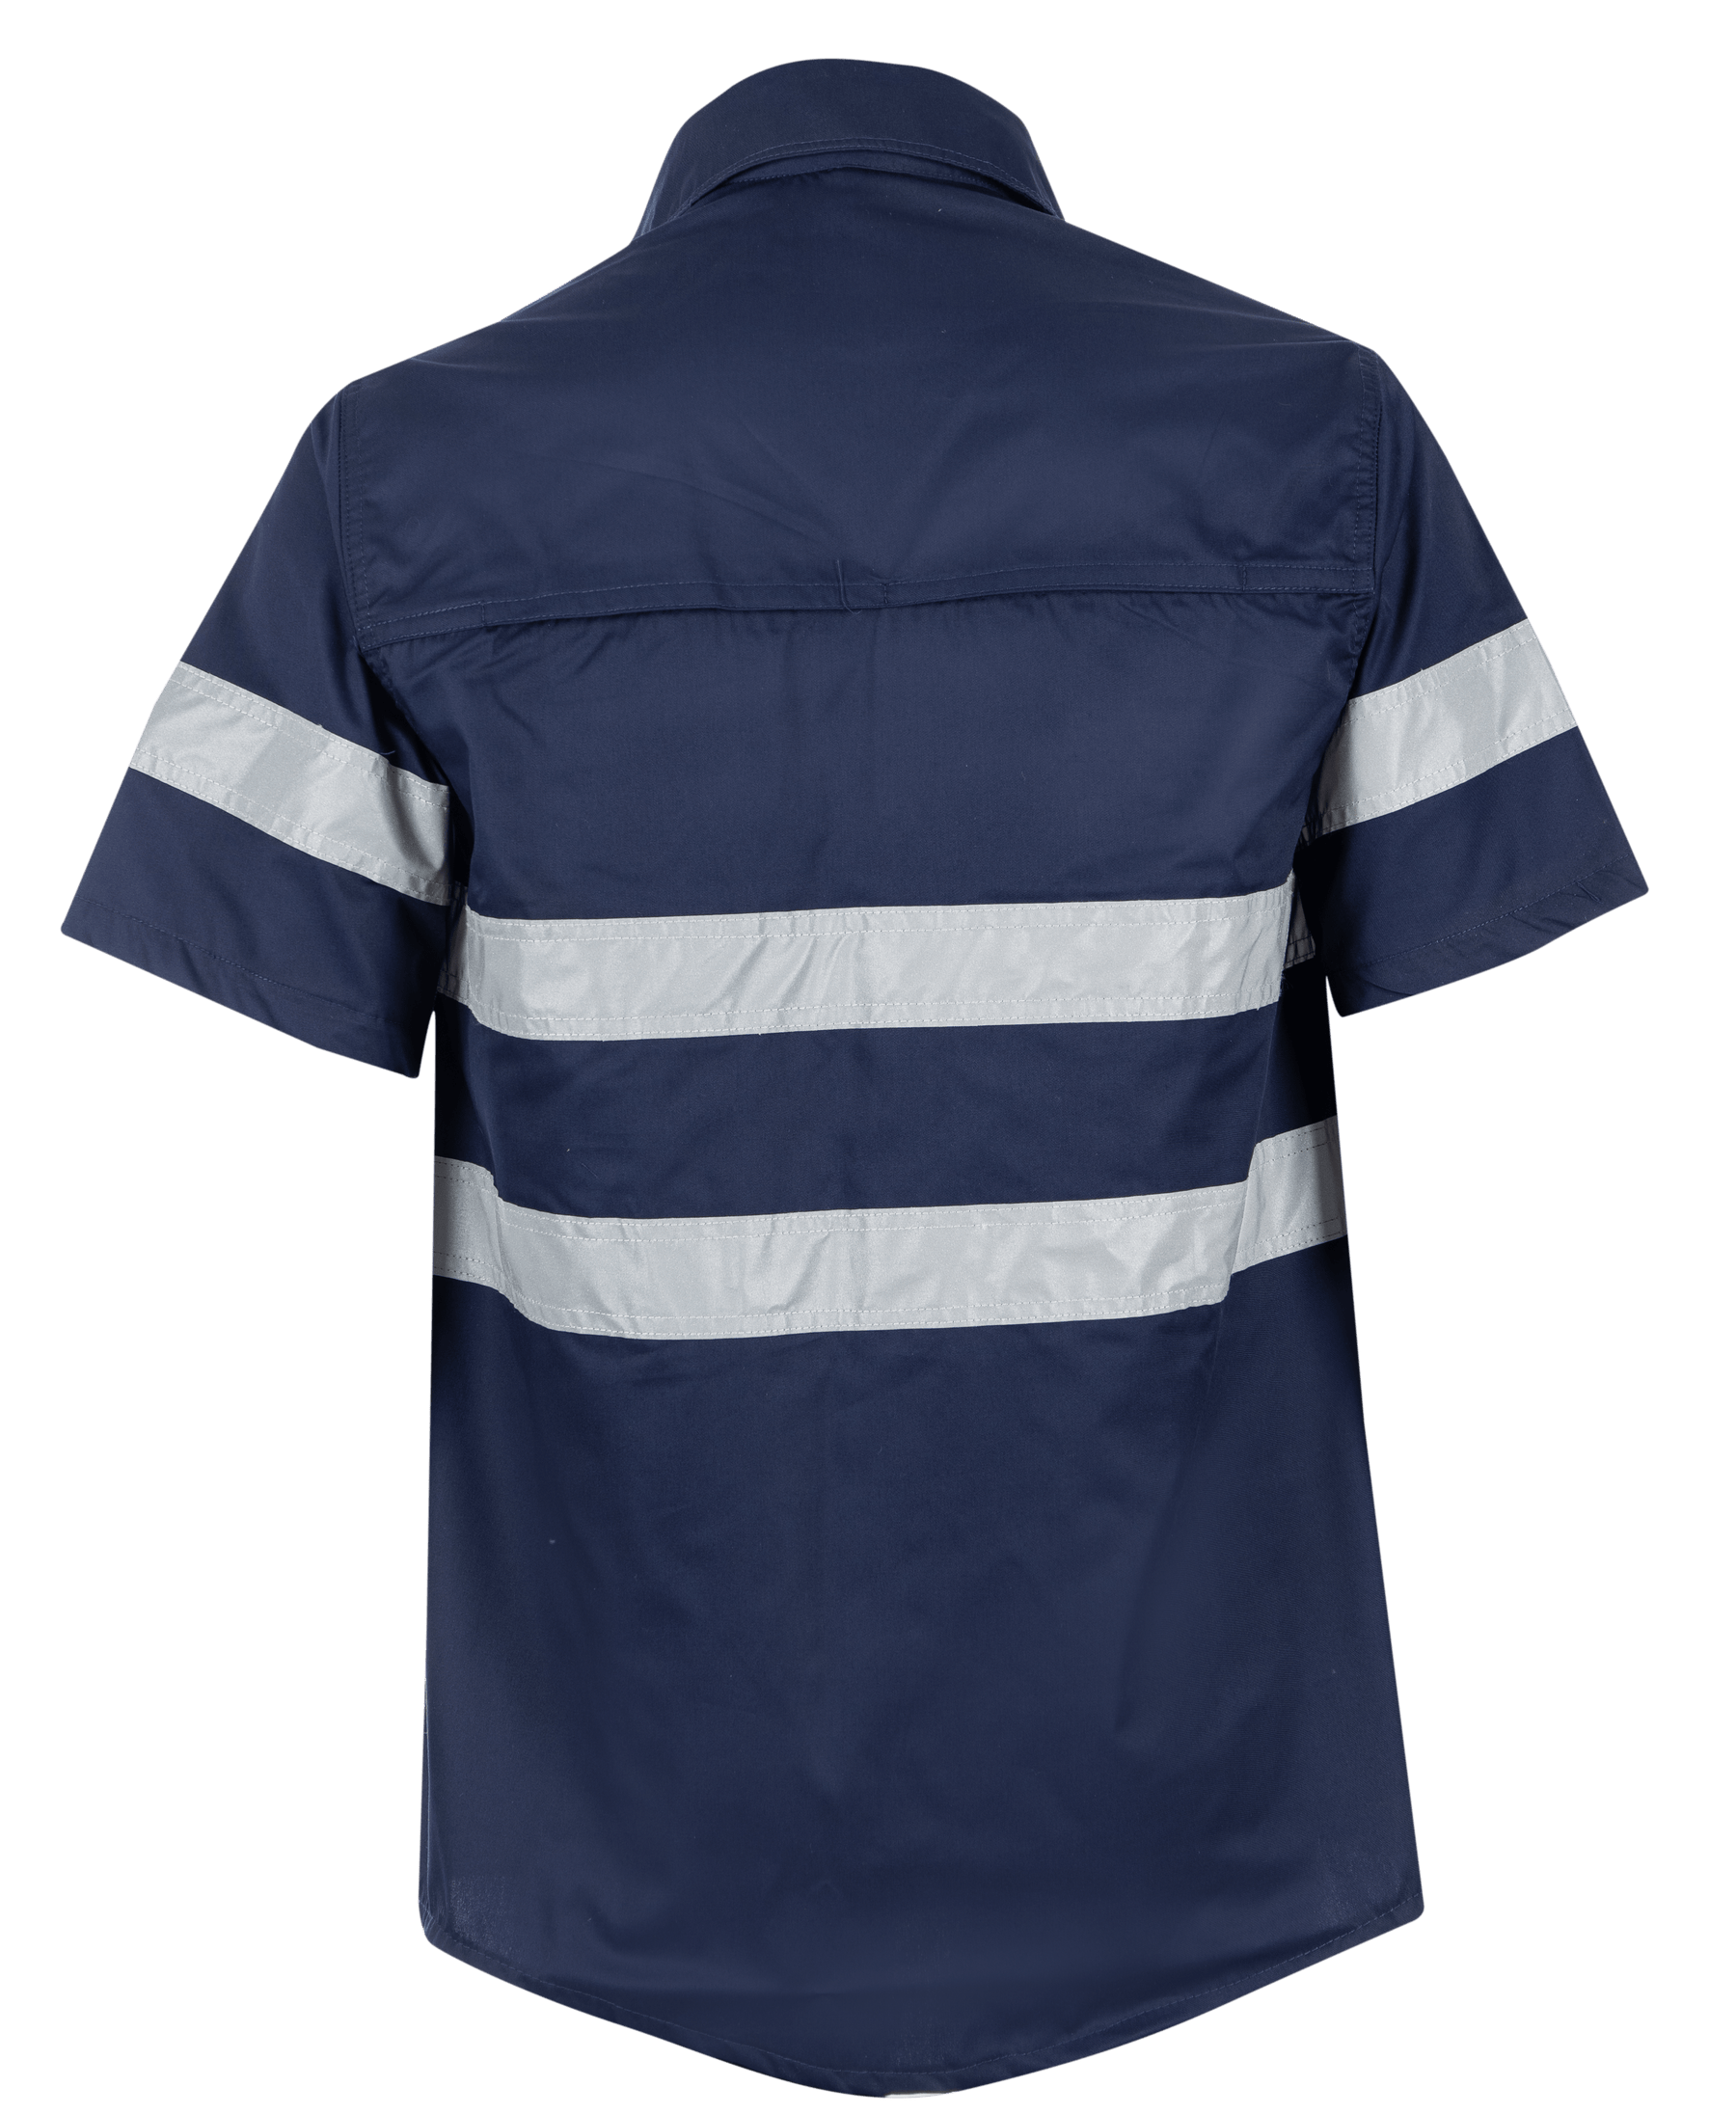 Reflective Shirt - Navy